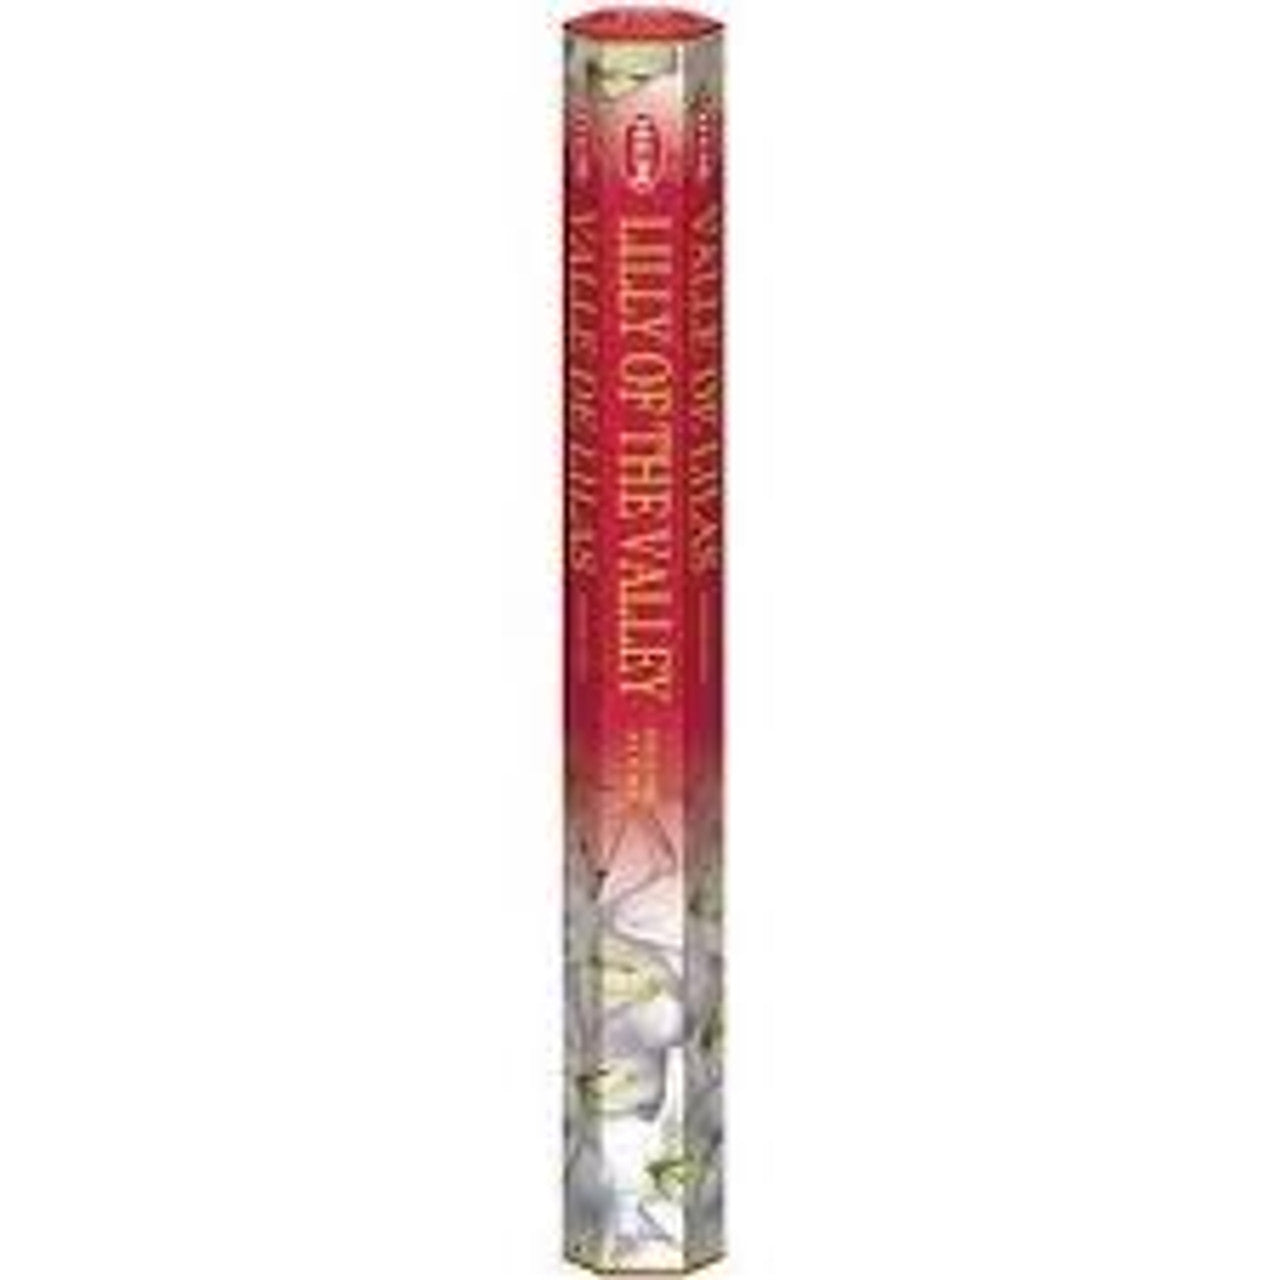 HEM Lily of the Valley Incense (20 sticks)